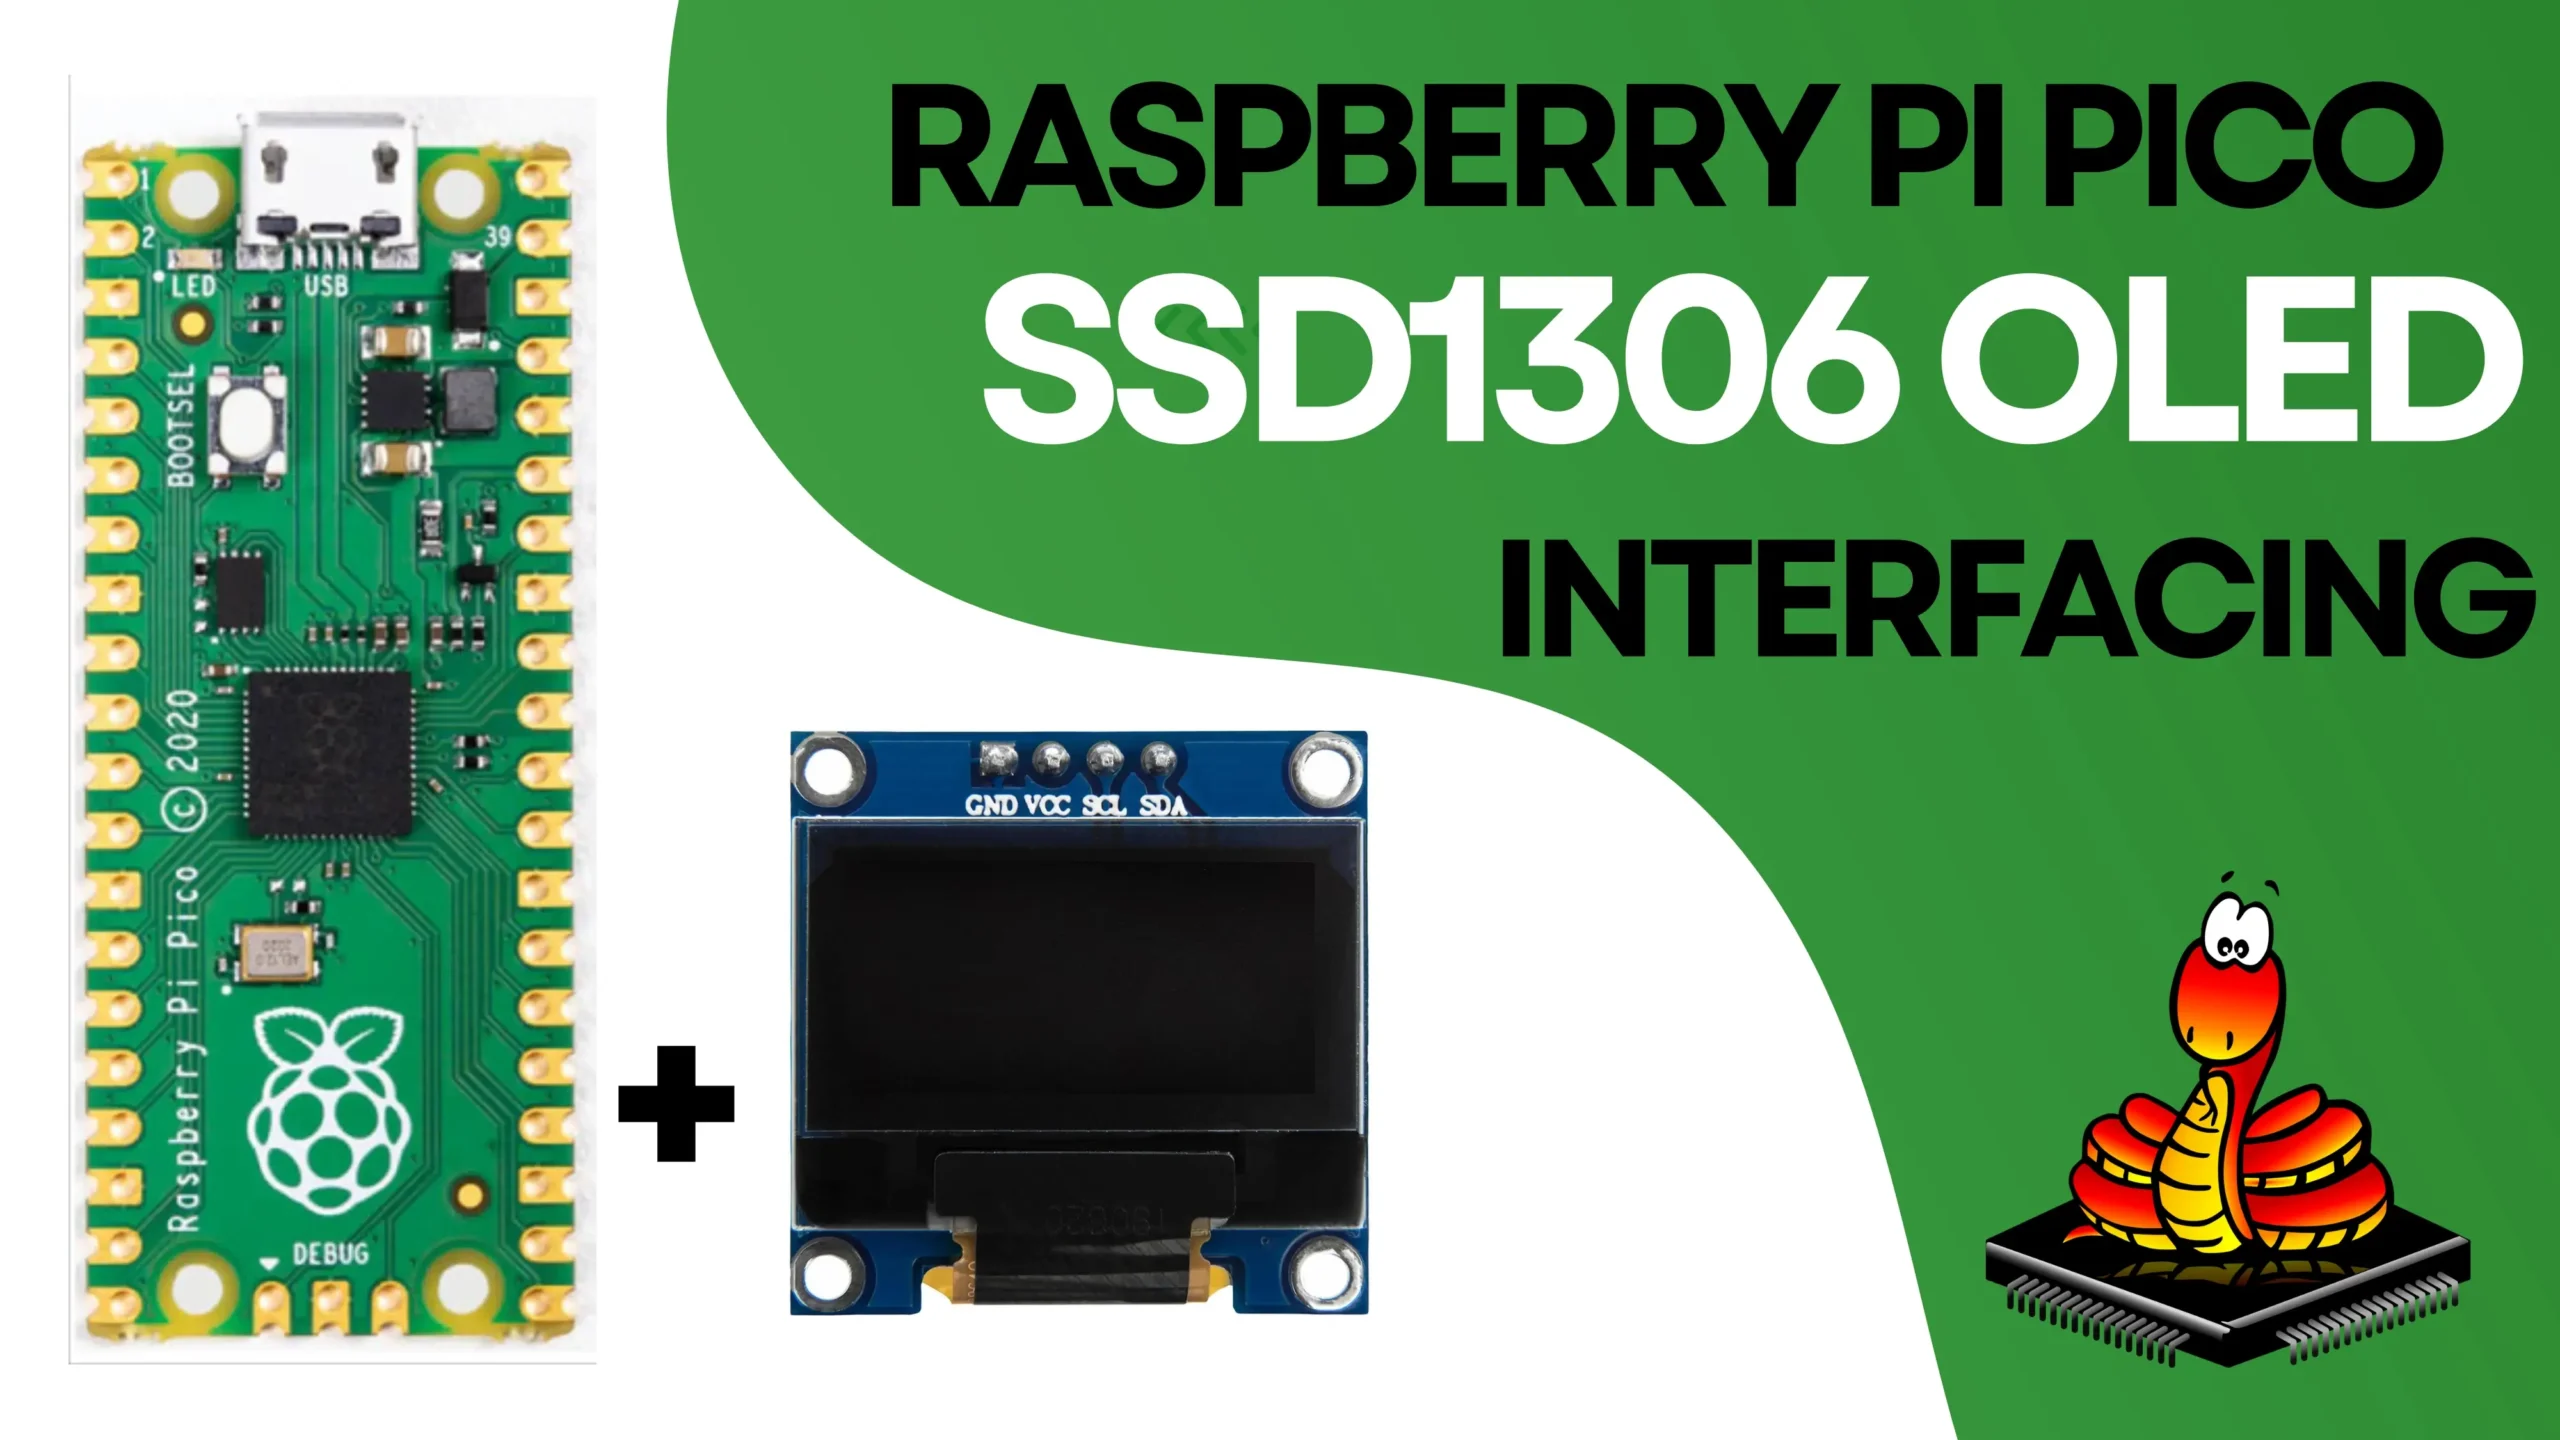 SSD1306 OLED Display with Raspberry Pi Pico